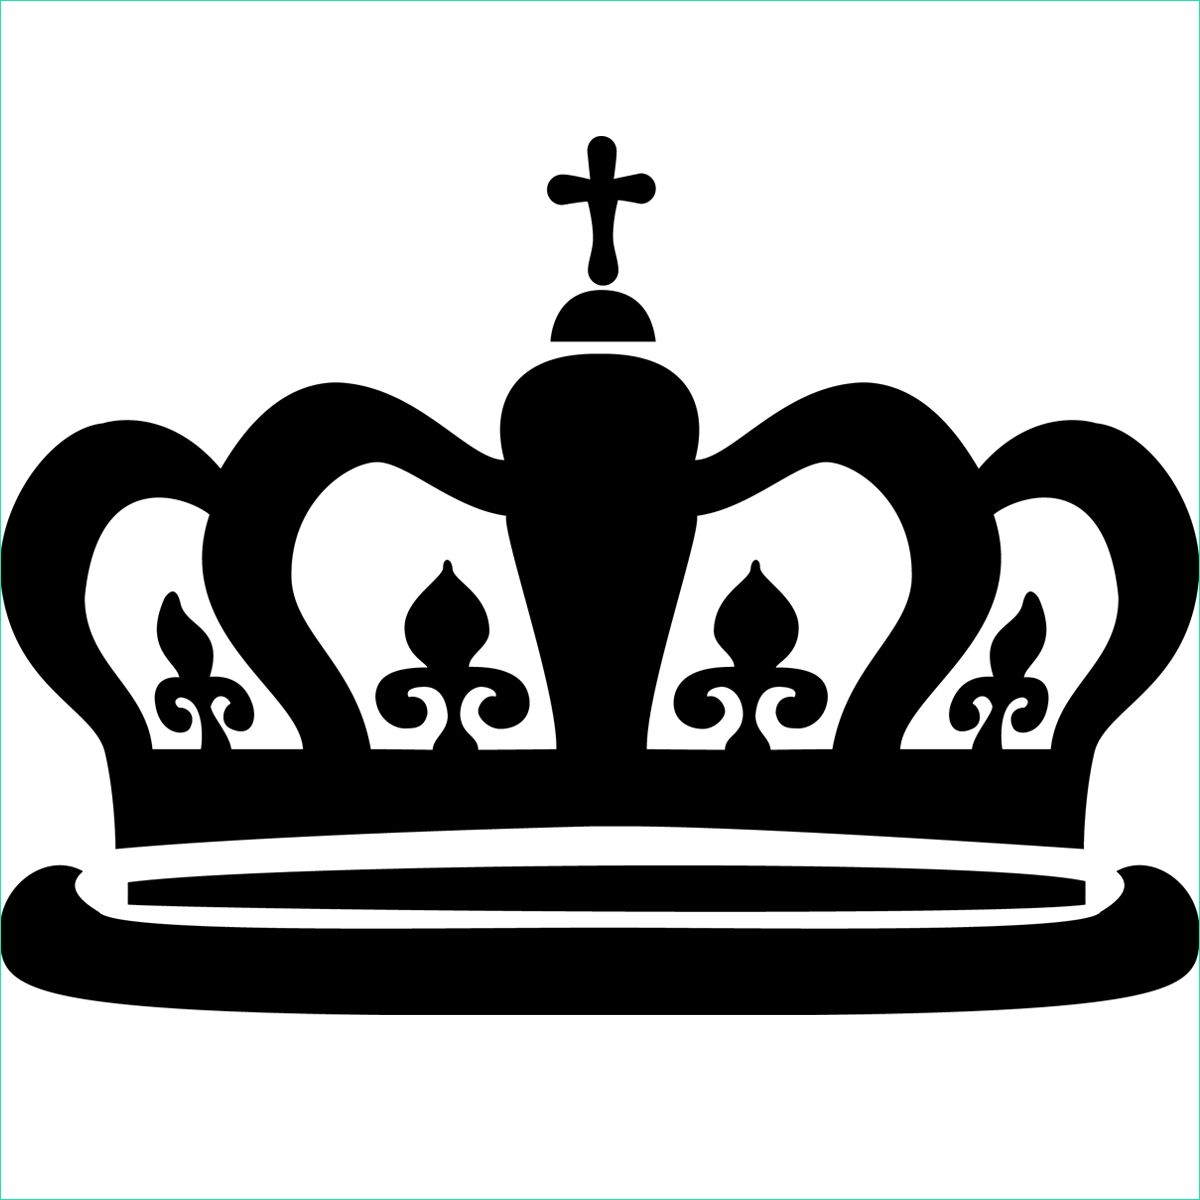 sticker couronne du roi xml 420 372 3311 8567